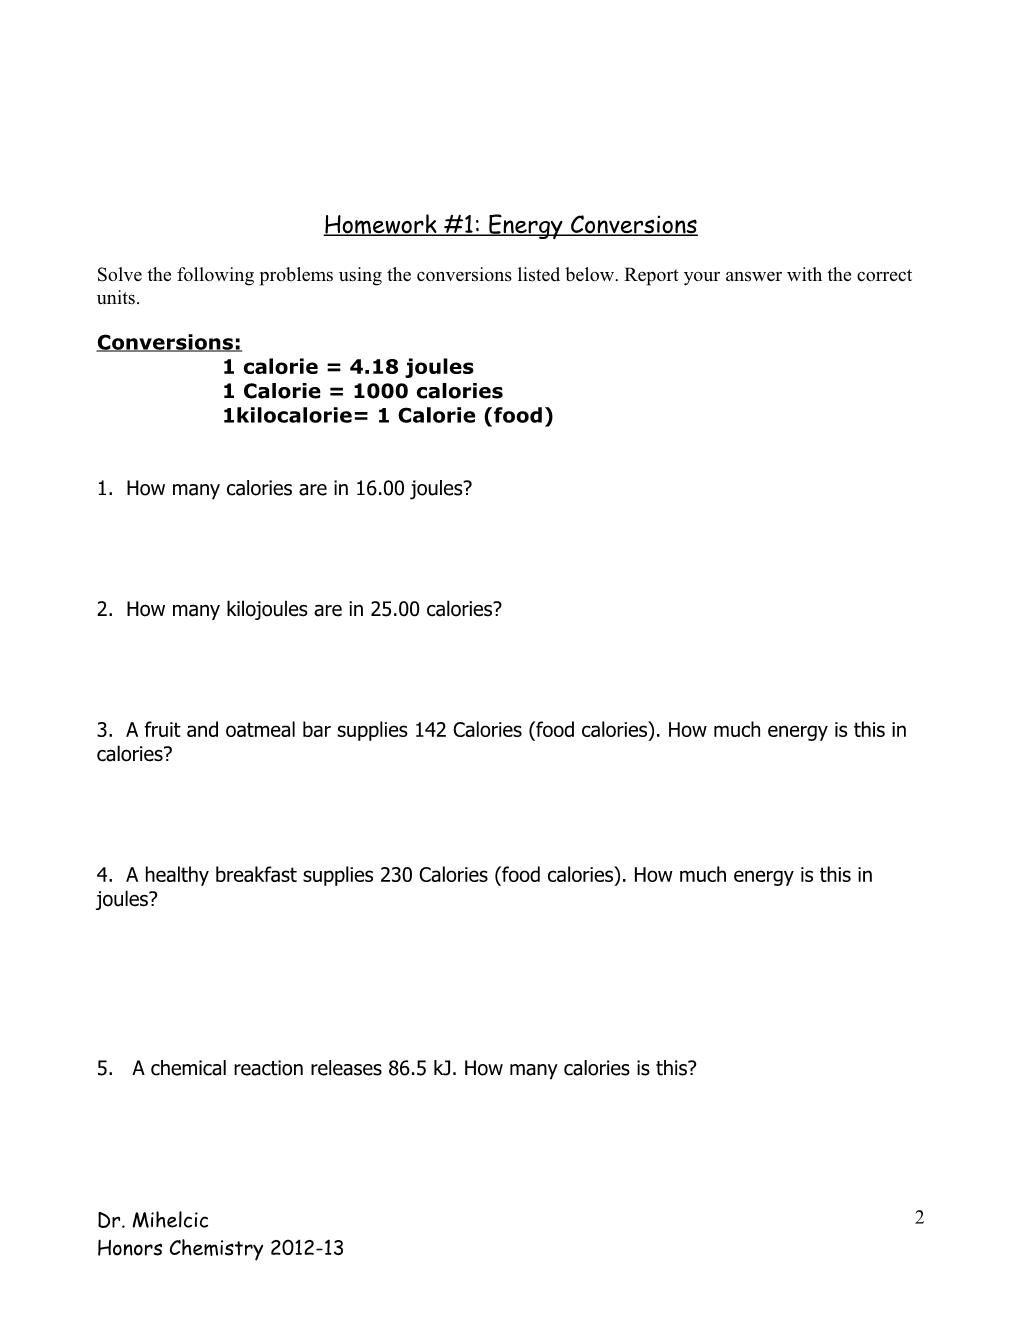 Homework #1: Energy Conversions s1